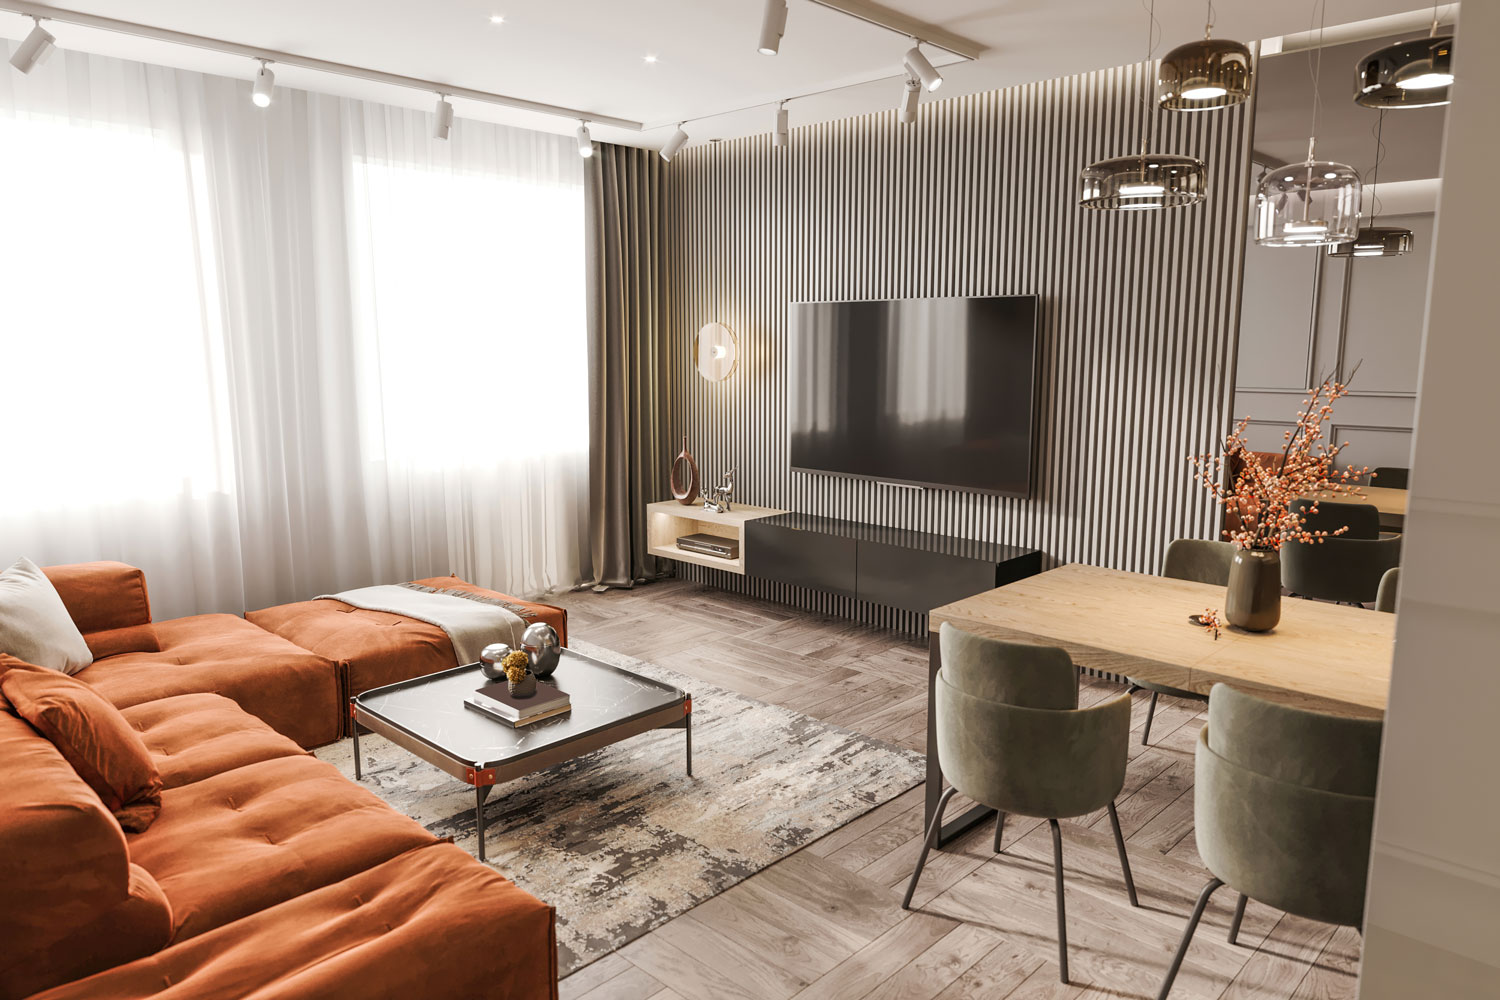 A comfortable modern living room condominium apartment decorated in contemporary design